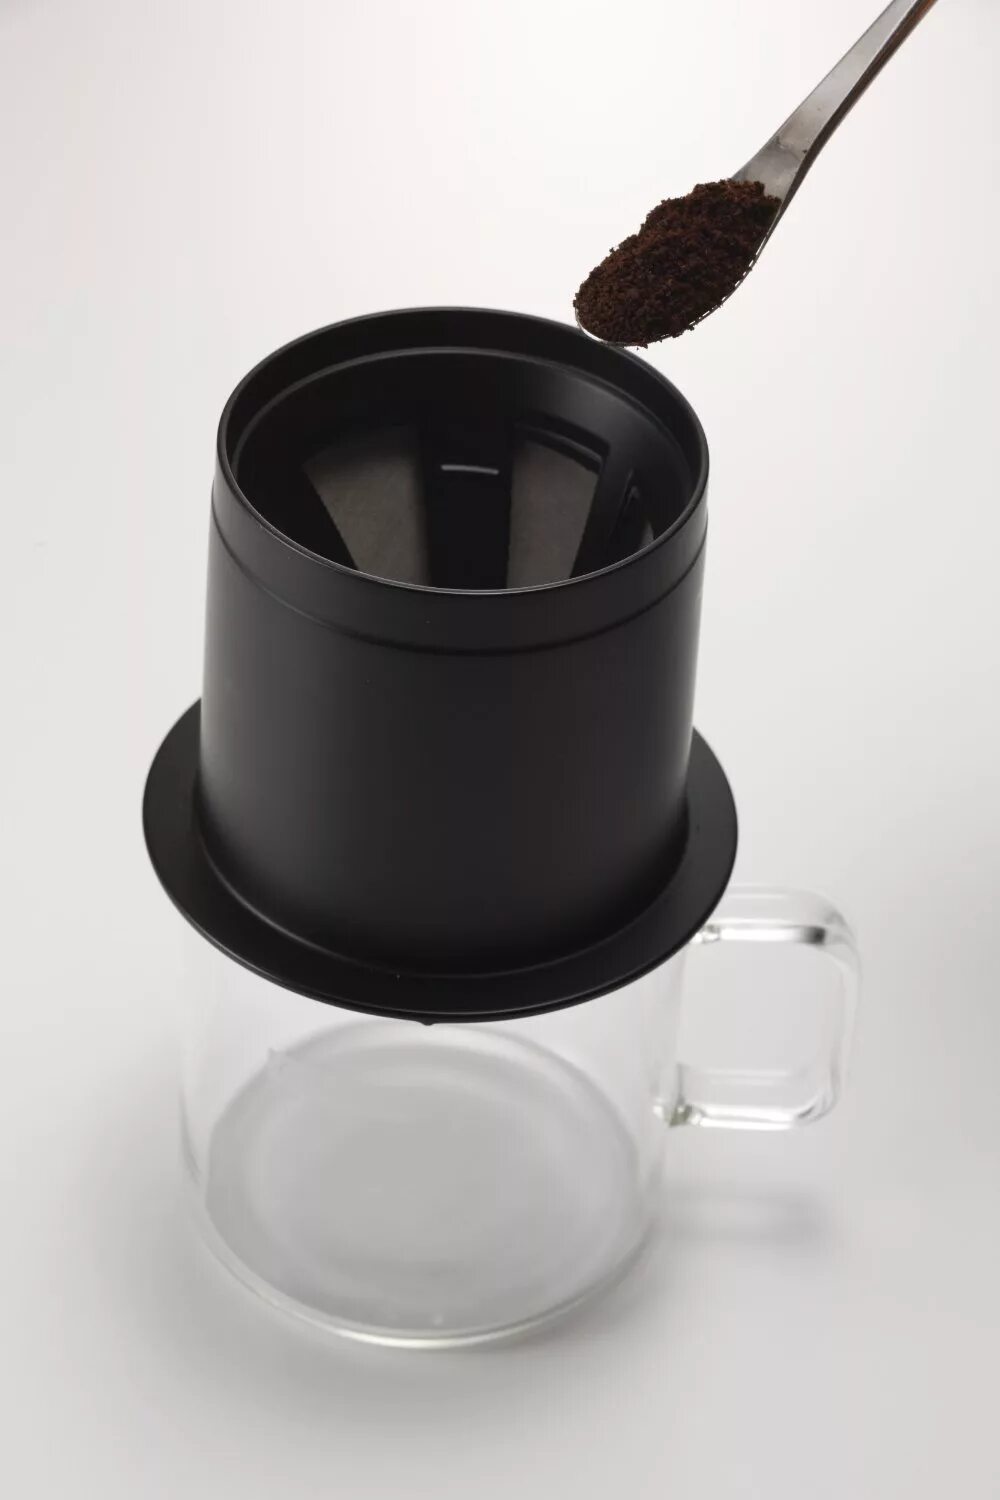 Кружки для заварки. Hario one-Cup Tea maker 200ml. Hario Гейзер. Чашка Харио. Кофе для заварки в чашке.